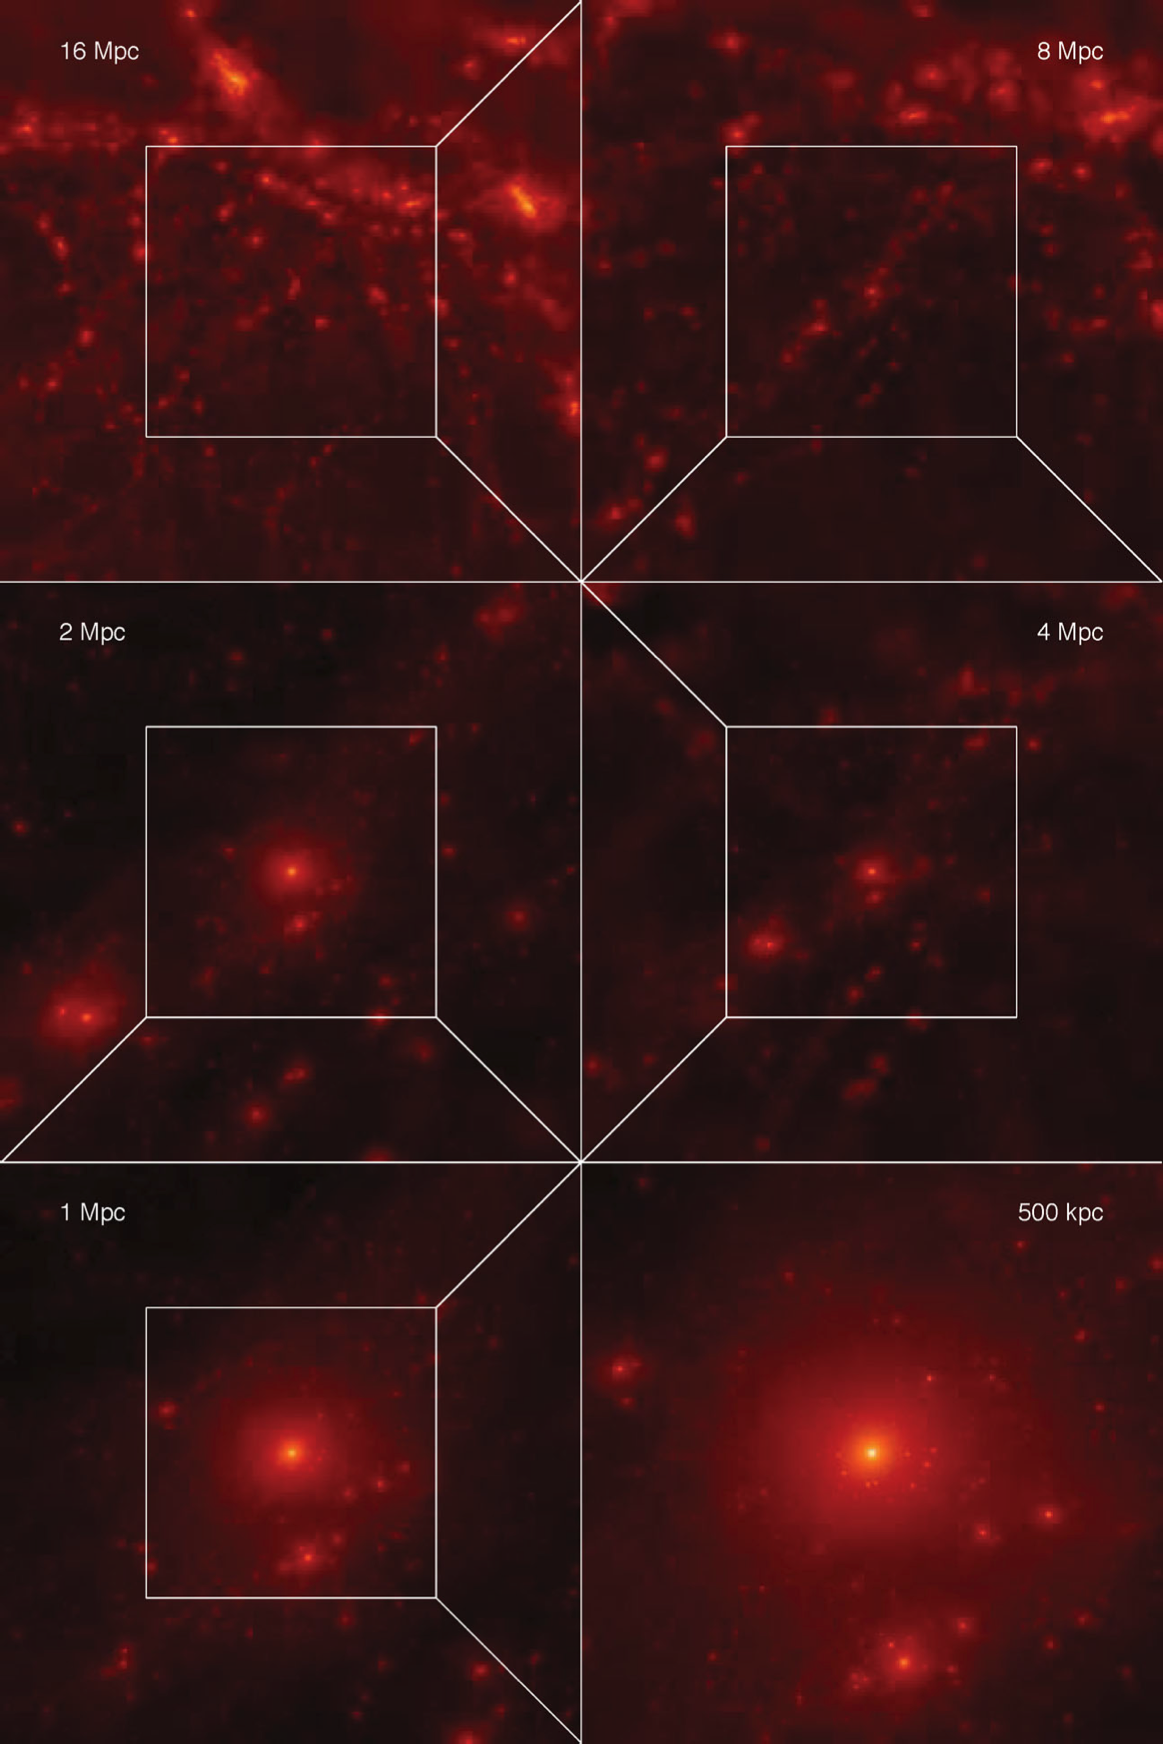 Maps of the dark matter distribution